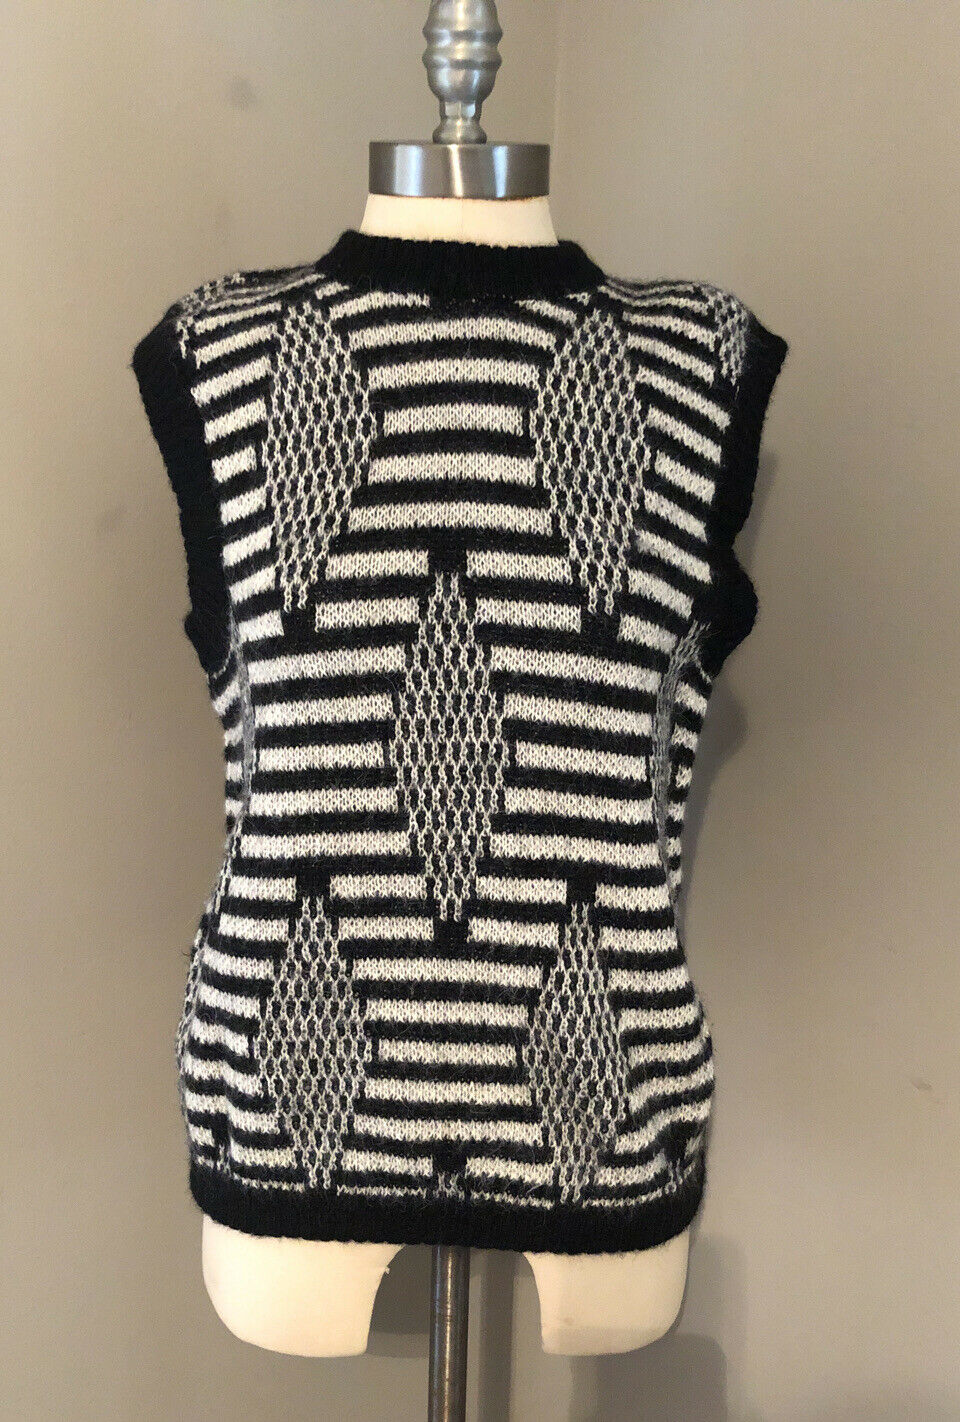 Vintage Sleeveless Sweater Vest 100% Alpaca Rolando Knitwear Peru Black White S